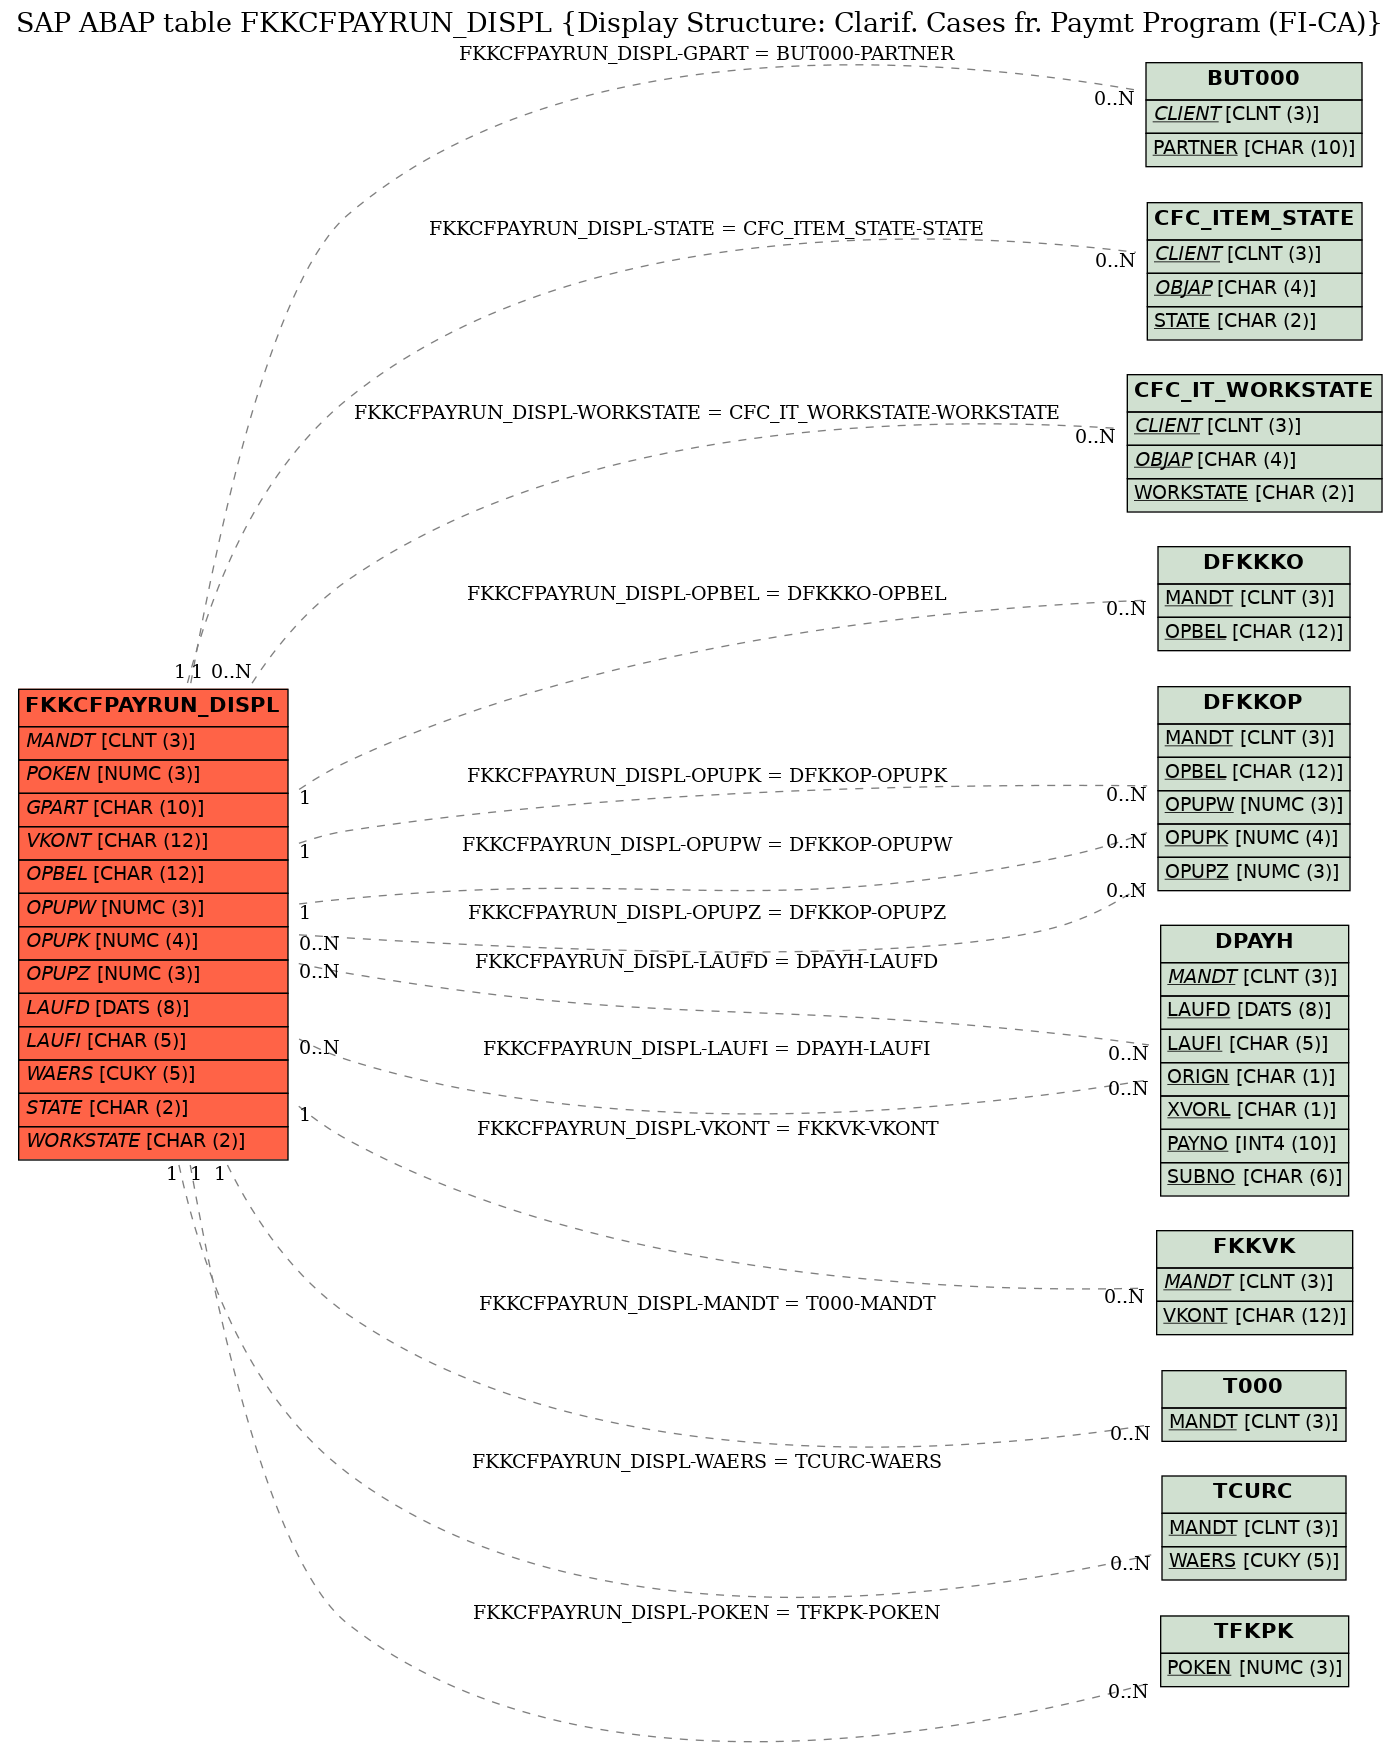 E-R Diagram for table FKKCFPAYRUN_DISPL (Display Structure: Clarif. Cases fr. Paymt Program (FI-CA))